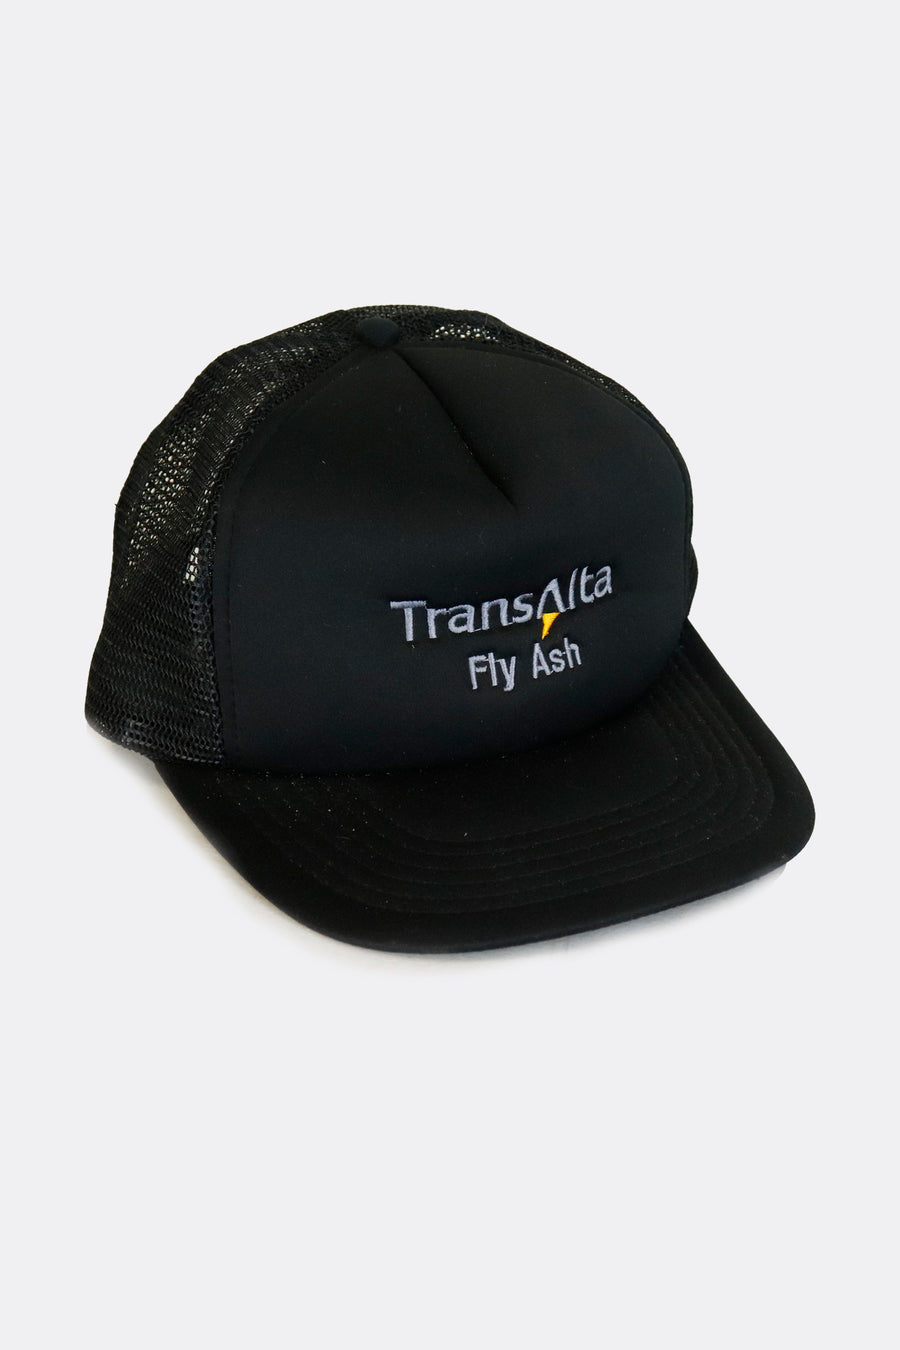 Vintage Trans Alta Fly Ash Snapback Trucker Hat